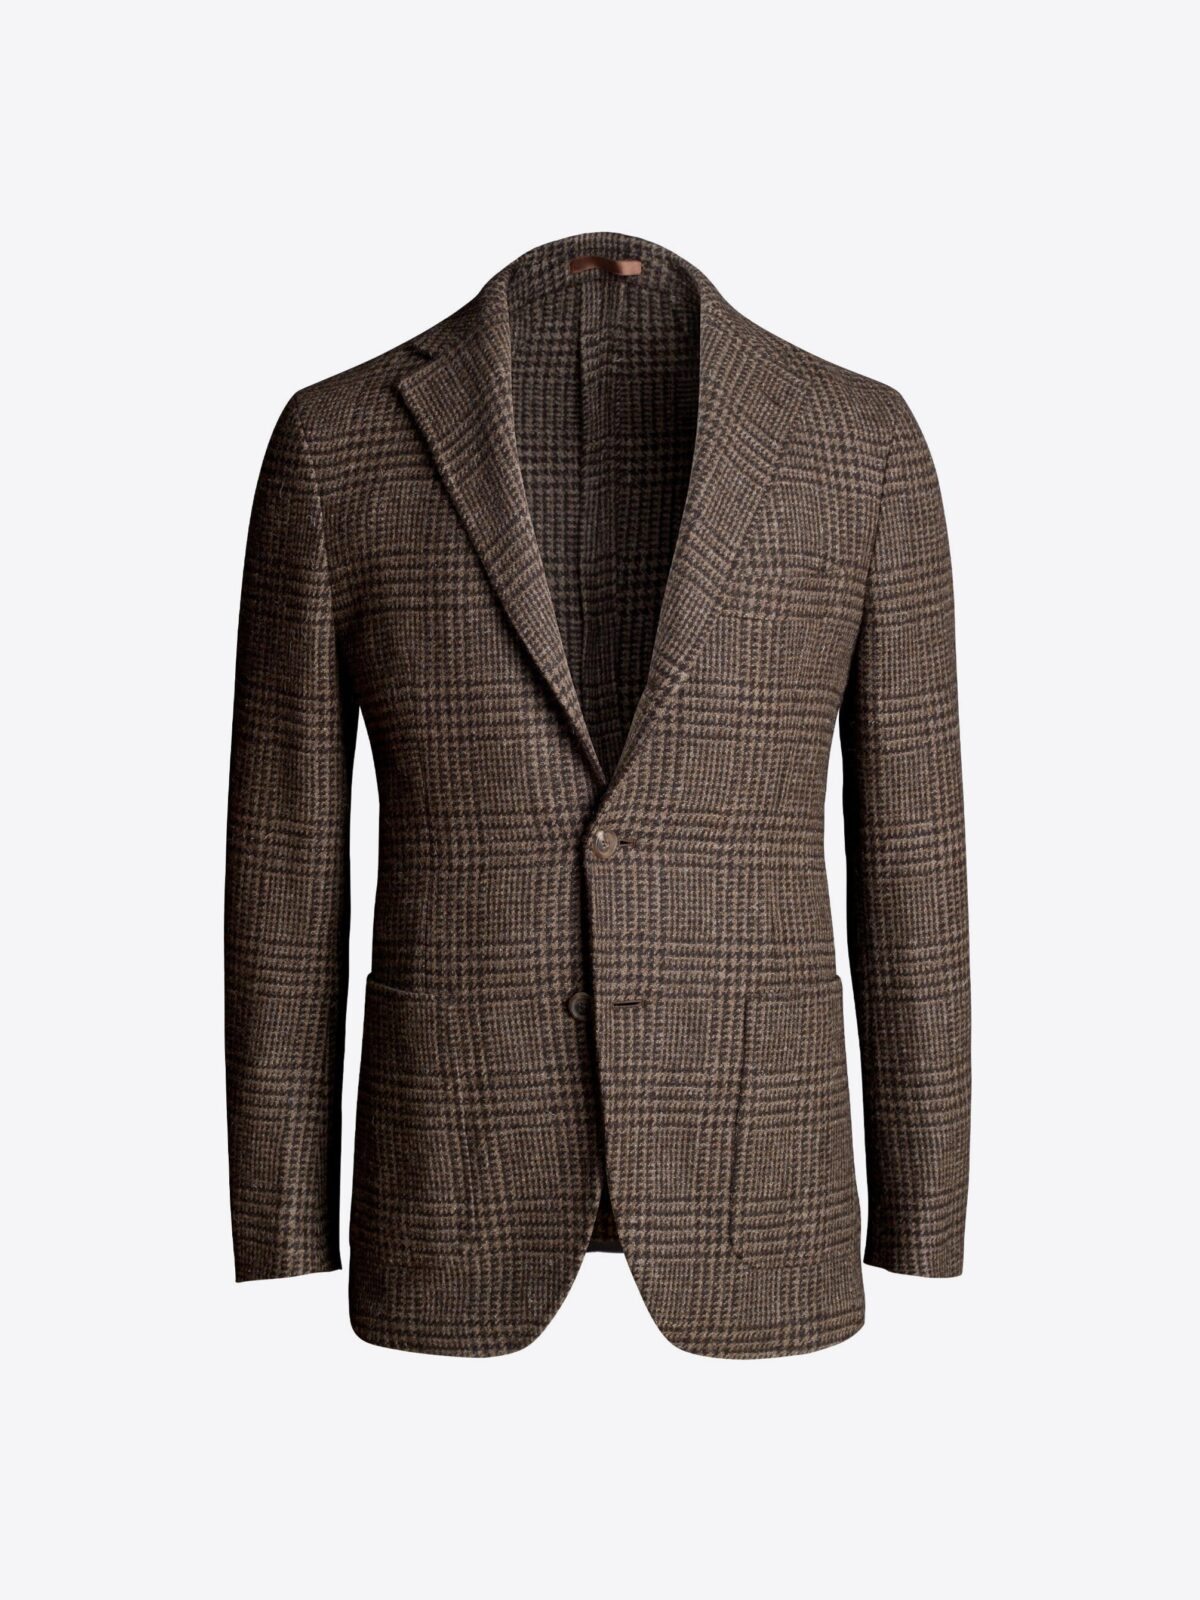 Waverly Brown Glen Plaid Tweed Jacket - Custom Fit Tailored Clothing